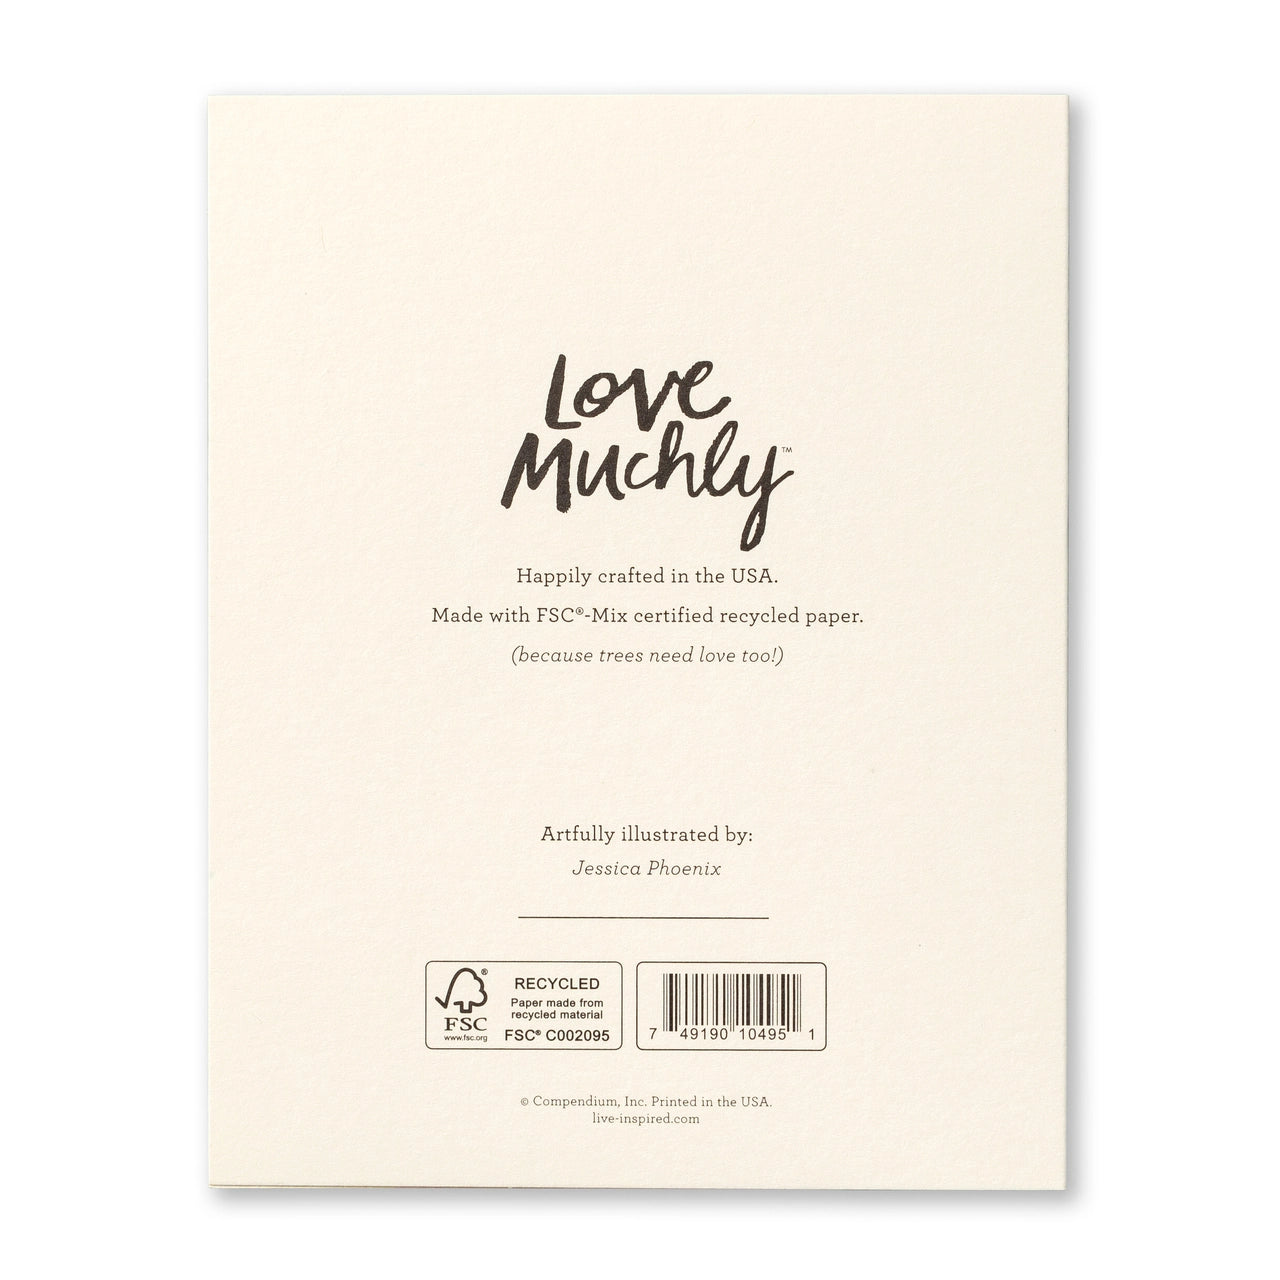 Love Muchly (BD) Birthday Card:  Birthdays Look Good On You